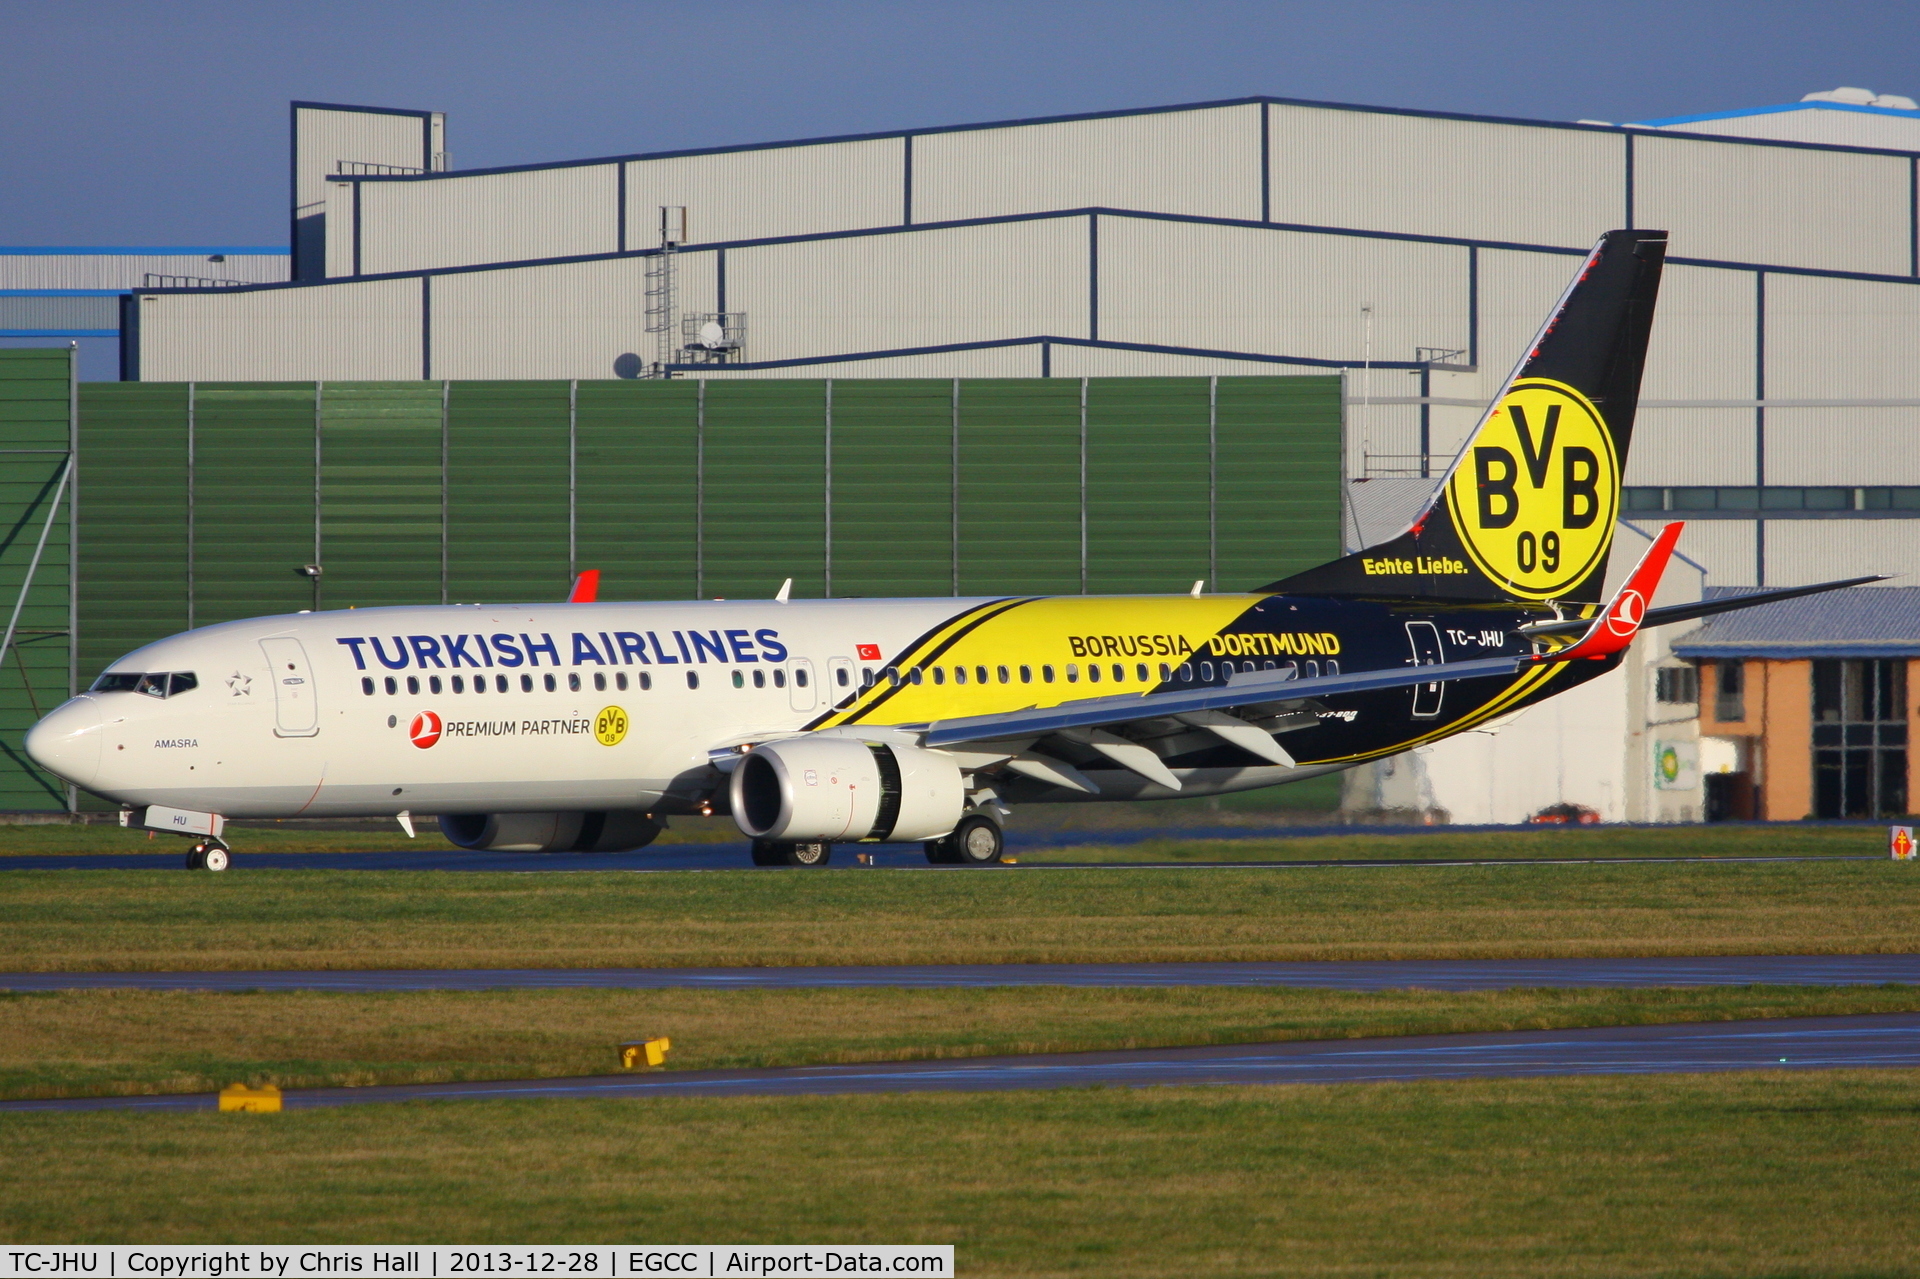 TC-JHU, 2013 Boeing 737-8F2 C/N 42002, Turkish Airlines in Borussia Dortmund livery